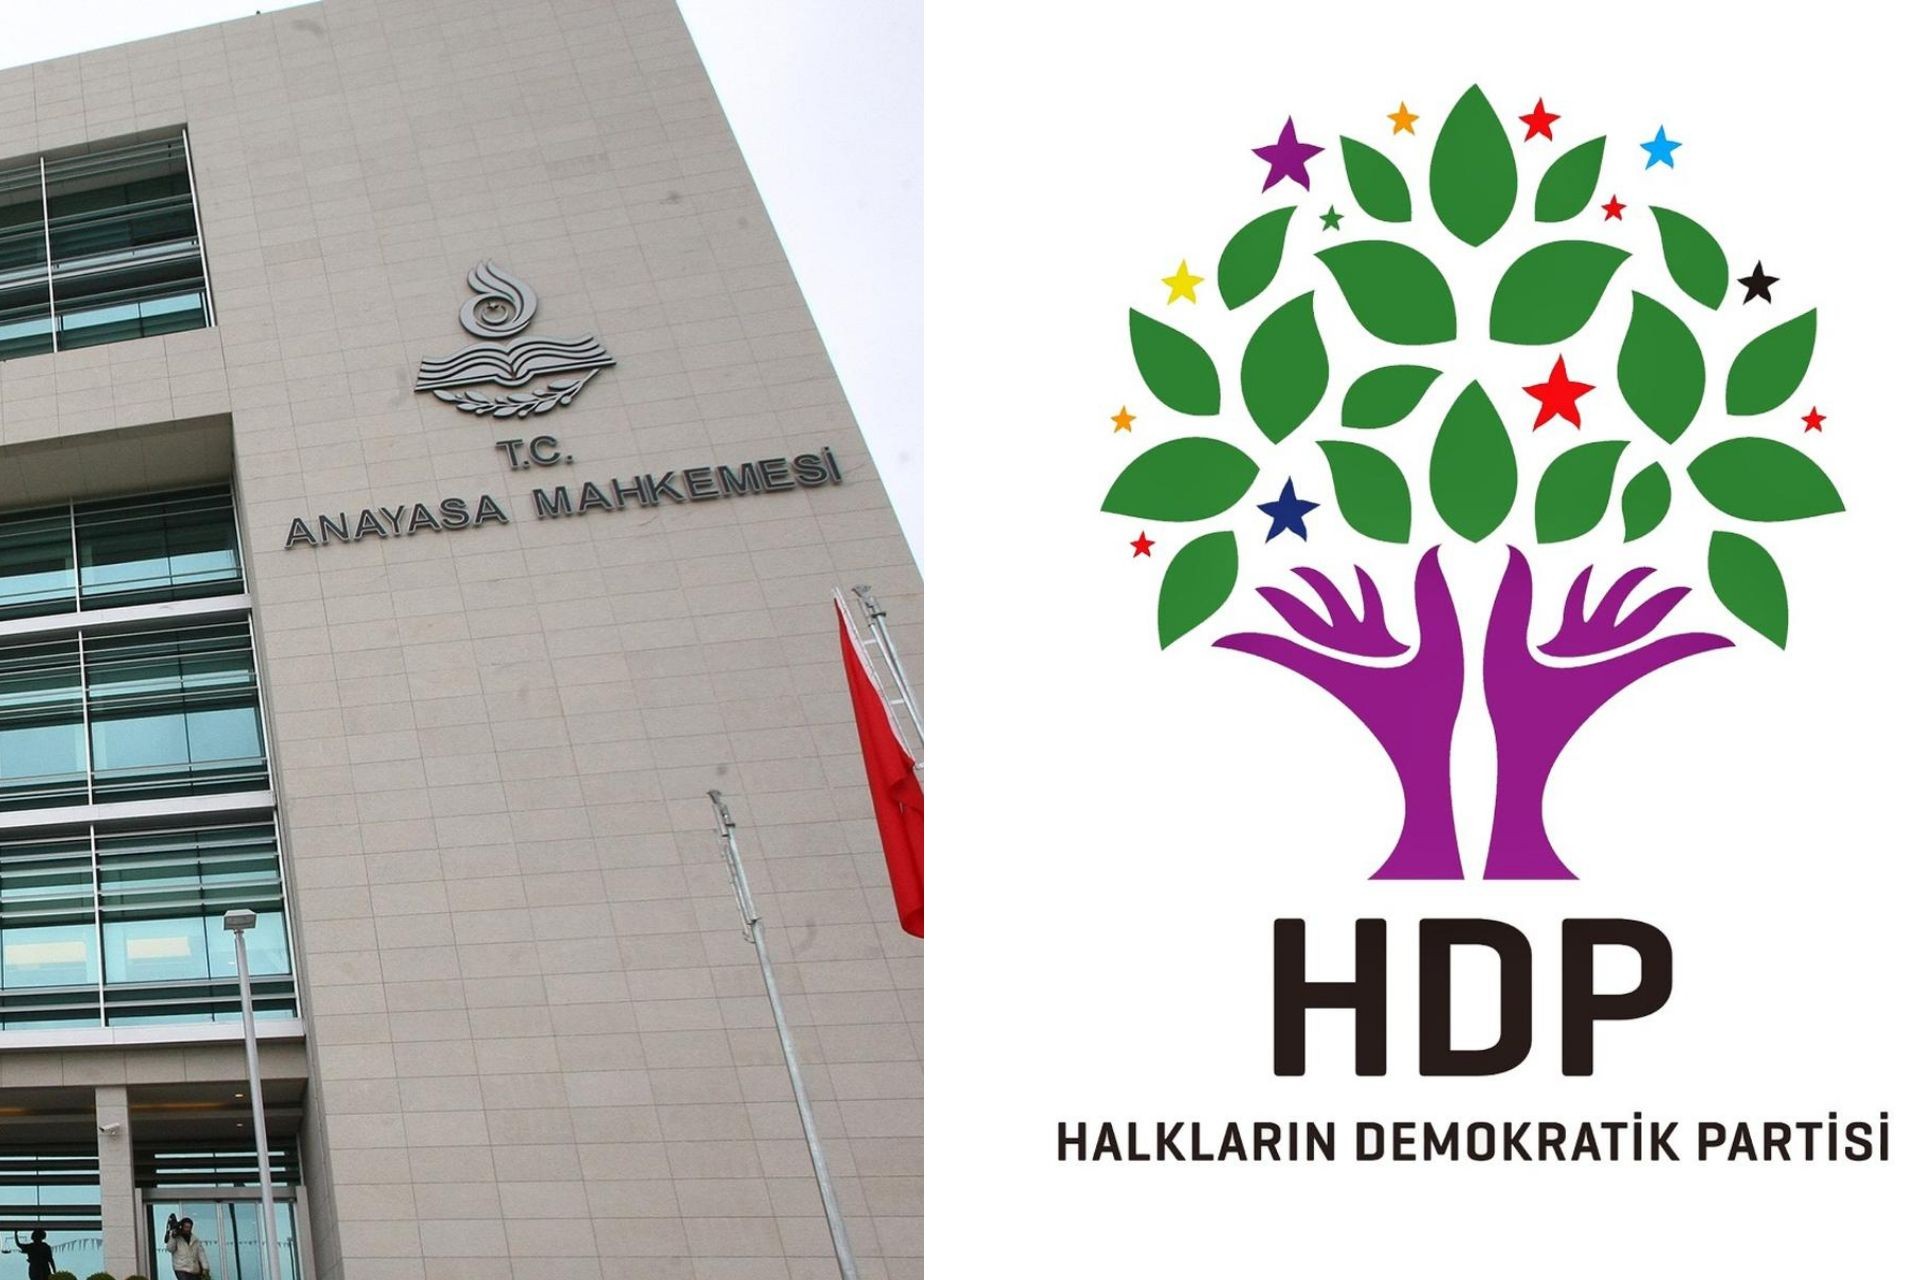 HDP’ ye Hazine yardımı engeli: AYM talebi derhal reddetmeli